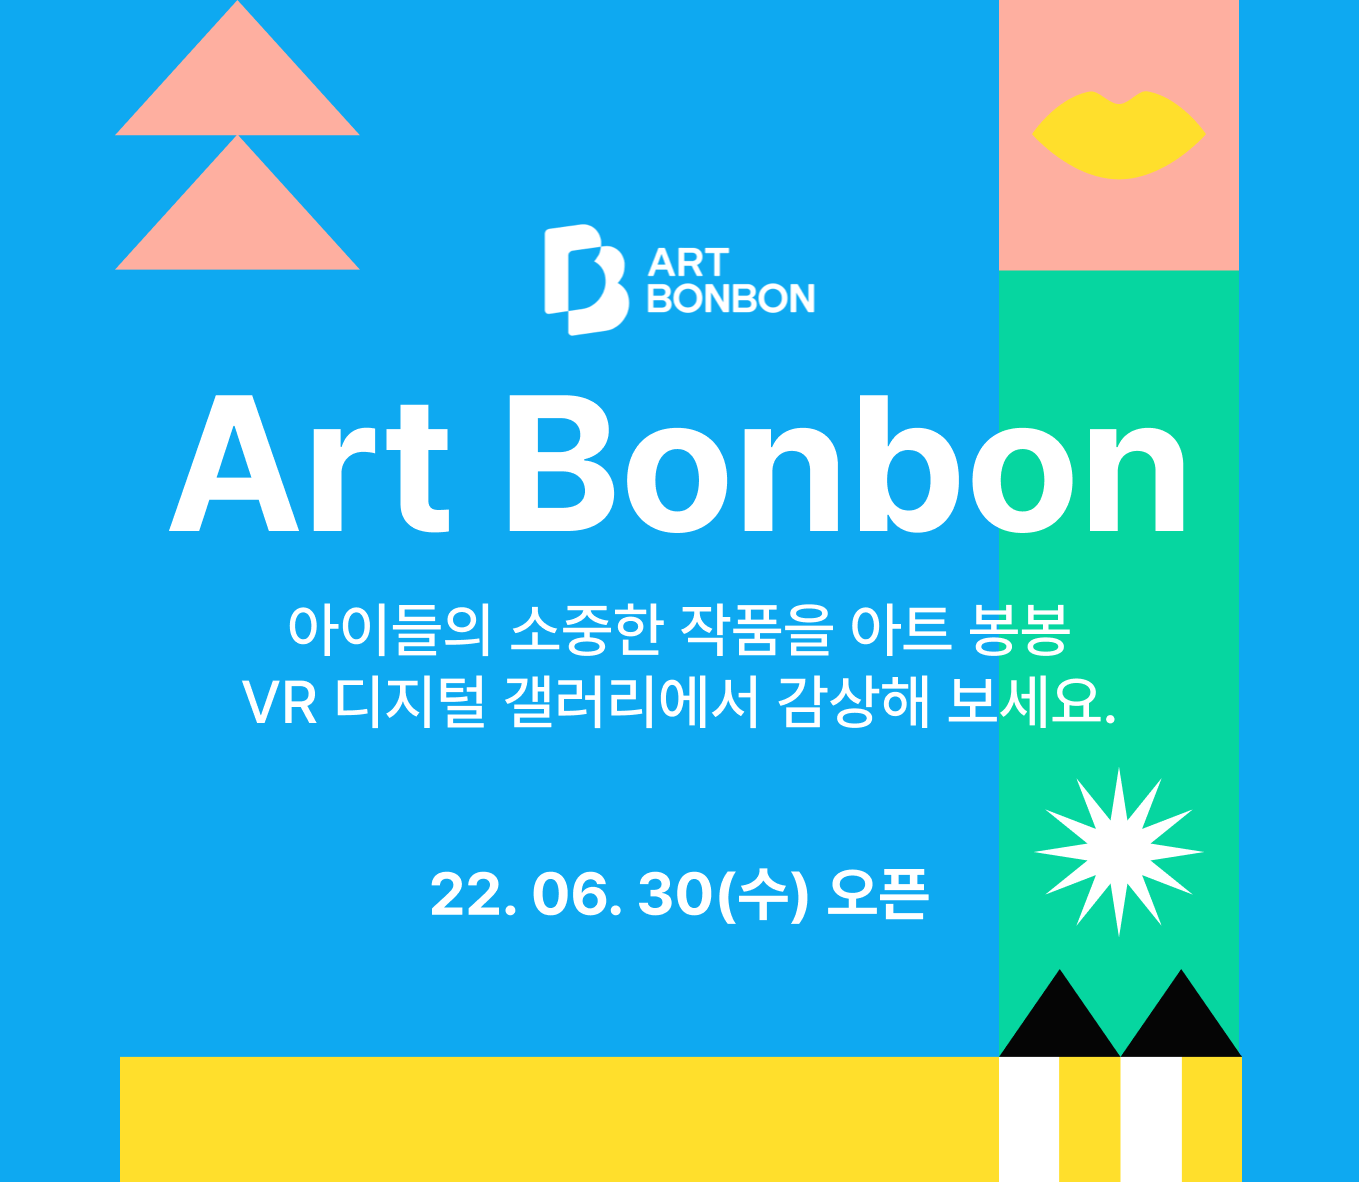 Art Bonbon, 아이들의 소중한 작품을 아트 봉봉 VR 디지털 갤러리에서 감상해 보세요. 22. 06. 30(수) 오픈